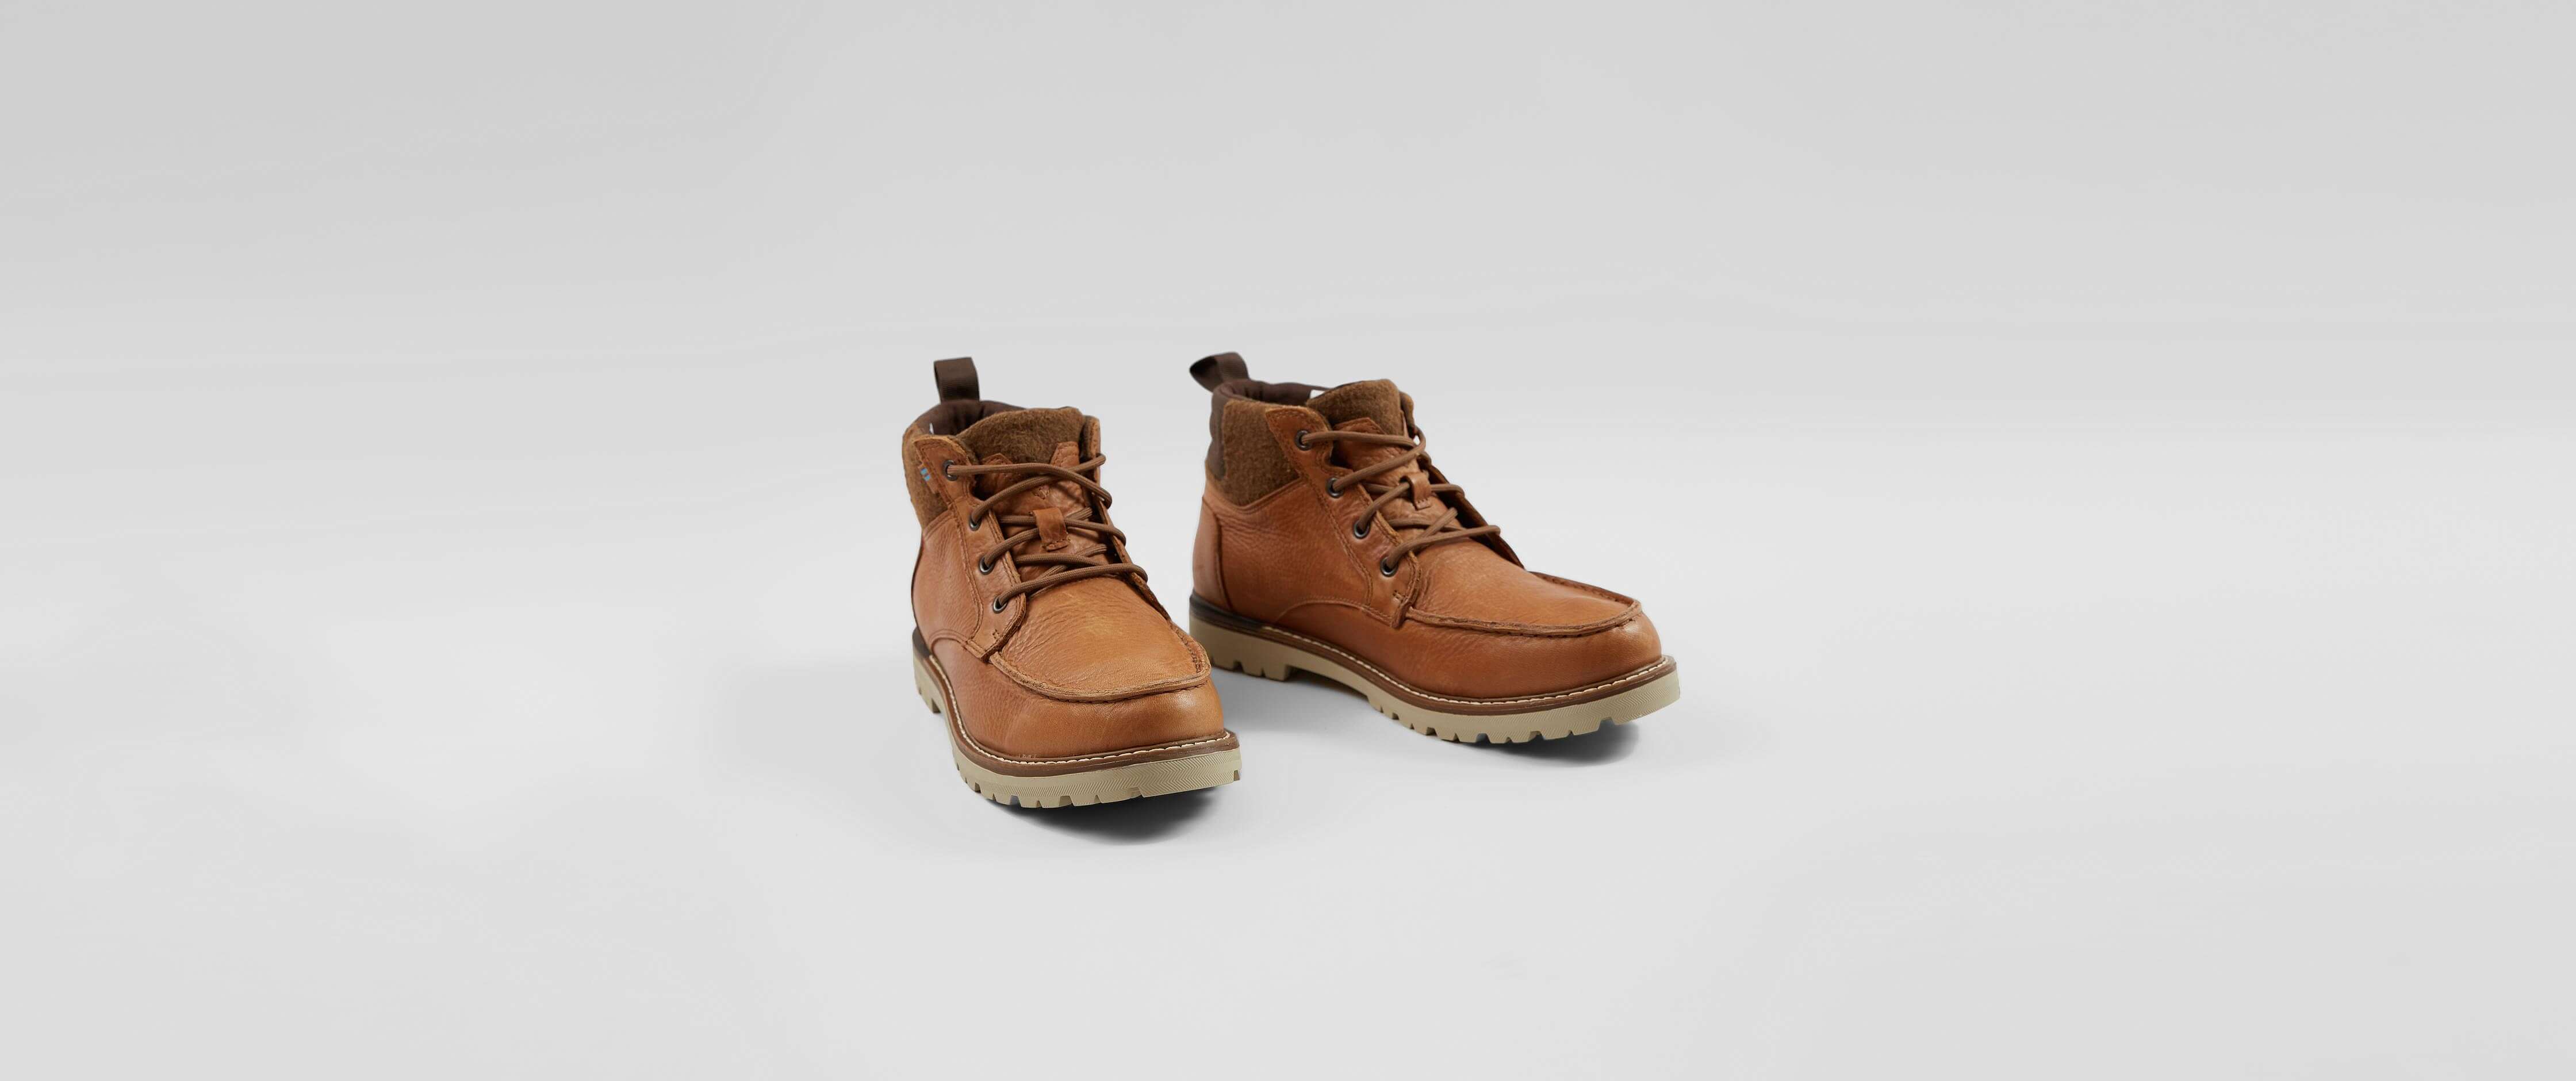 waterproof twig oiled suede men's ashland boots